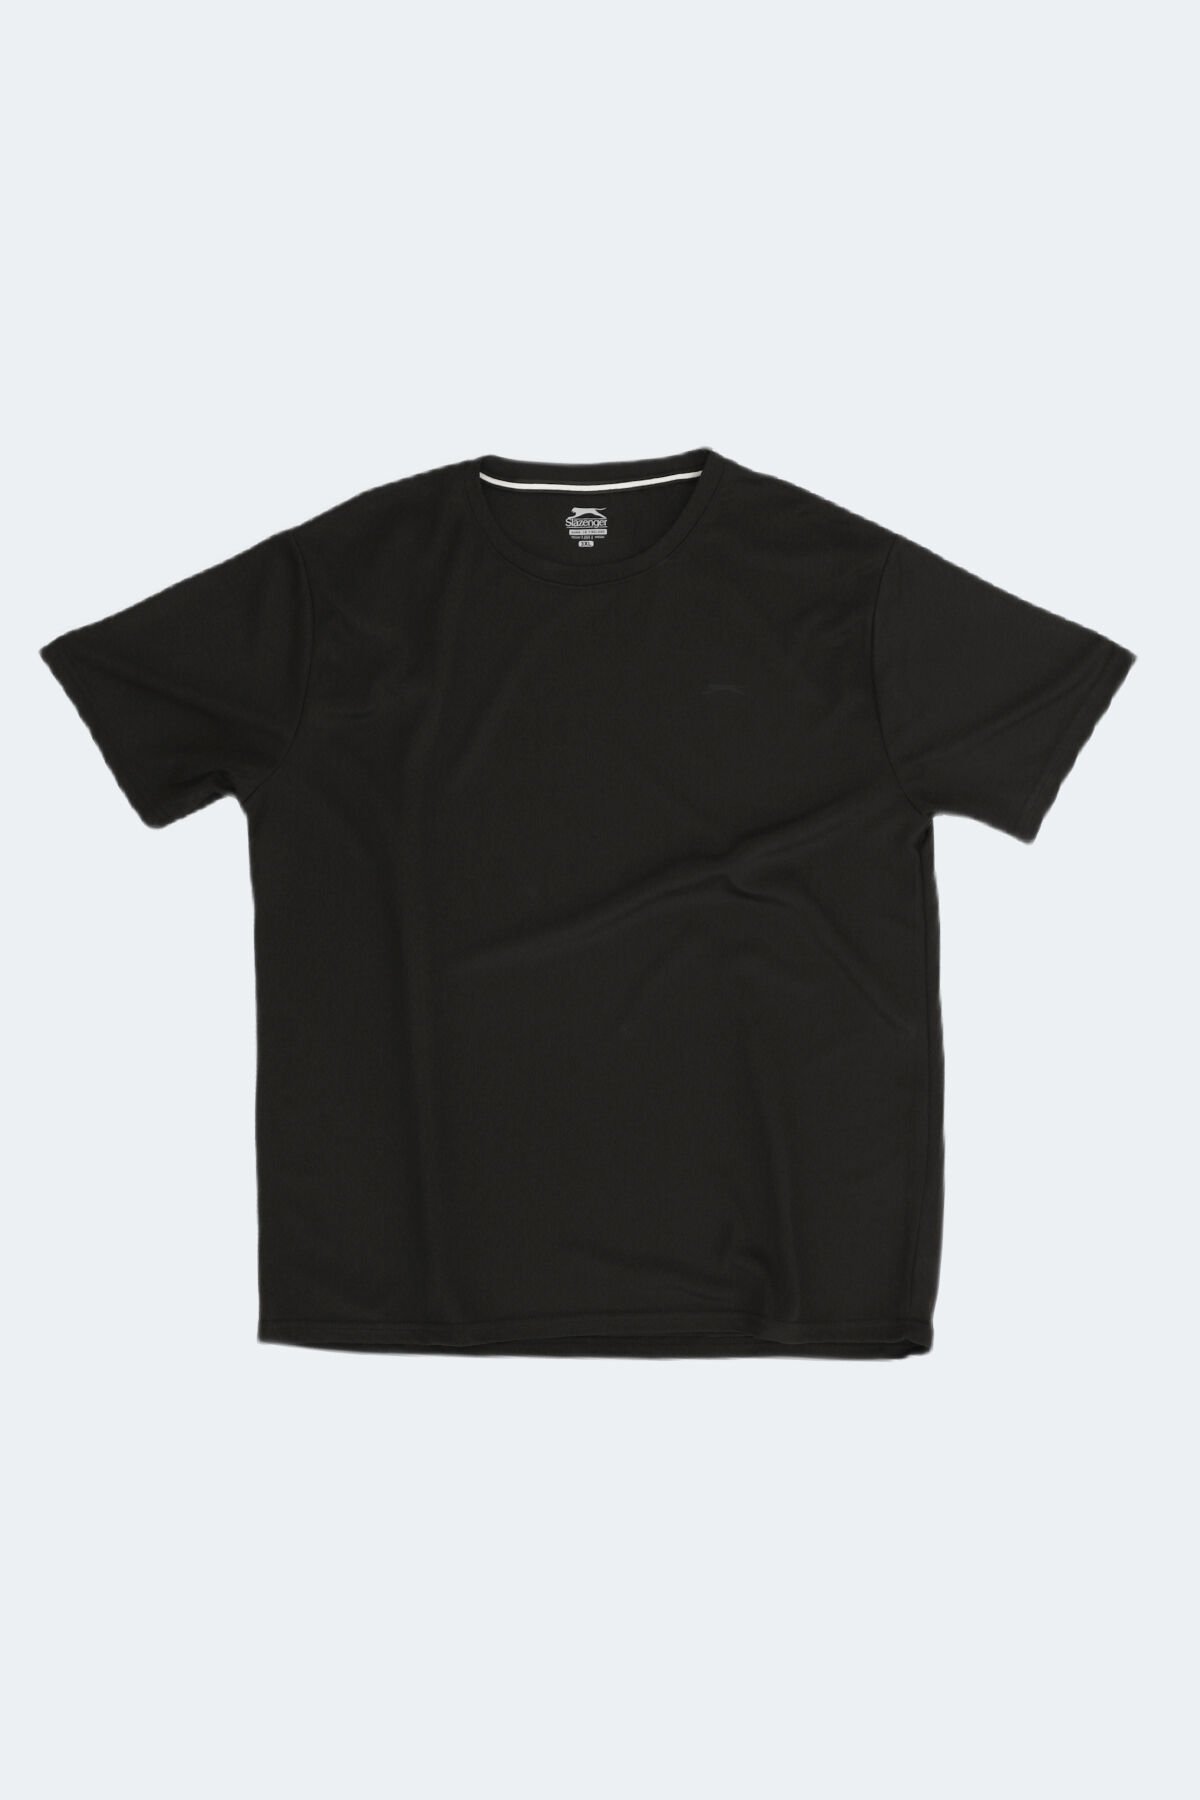 Slazenger ODALIS Büyük Beden Erkek Kısa Kol T-Shirt Siyah - Thumbnail